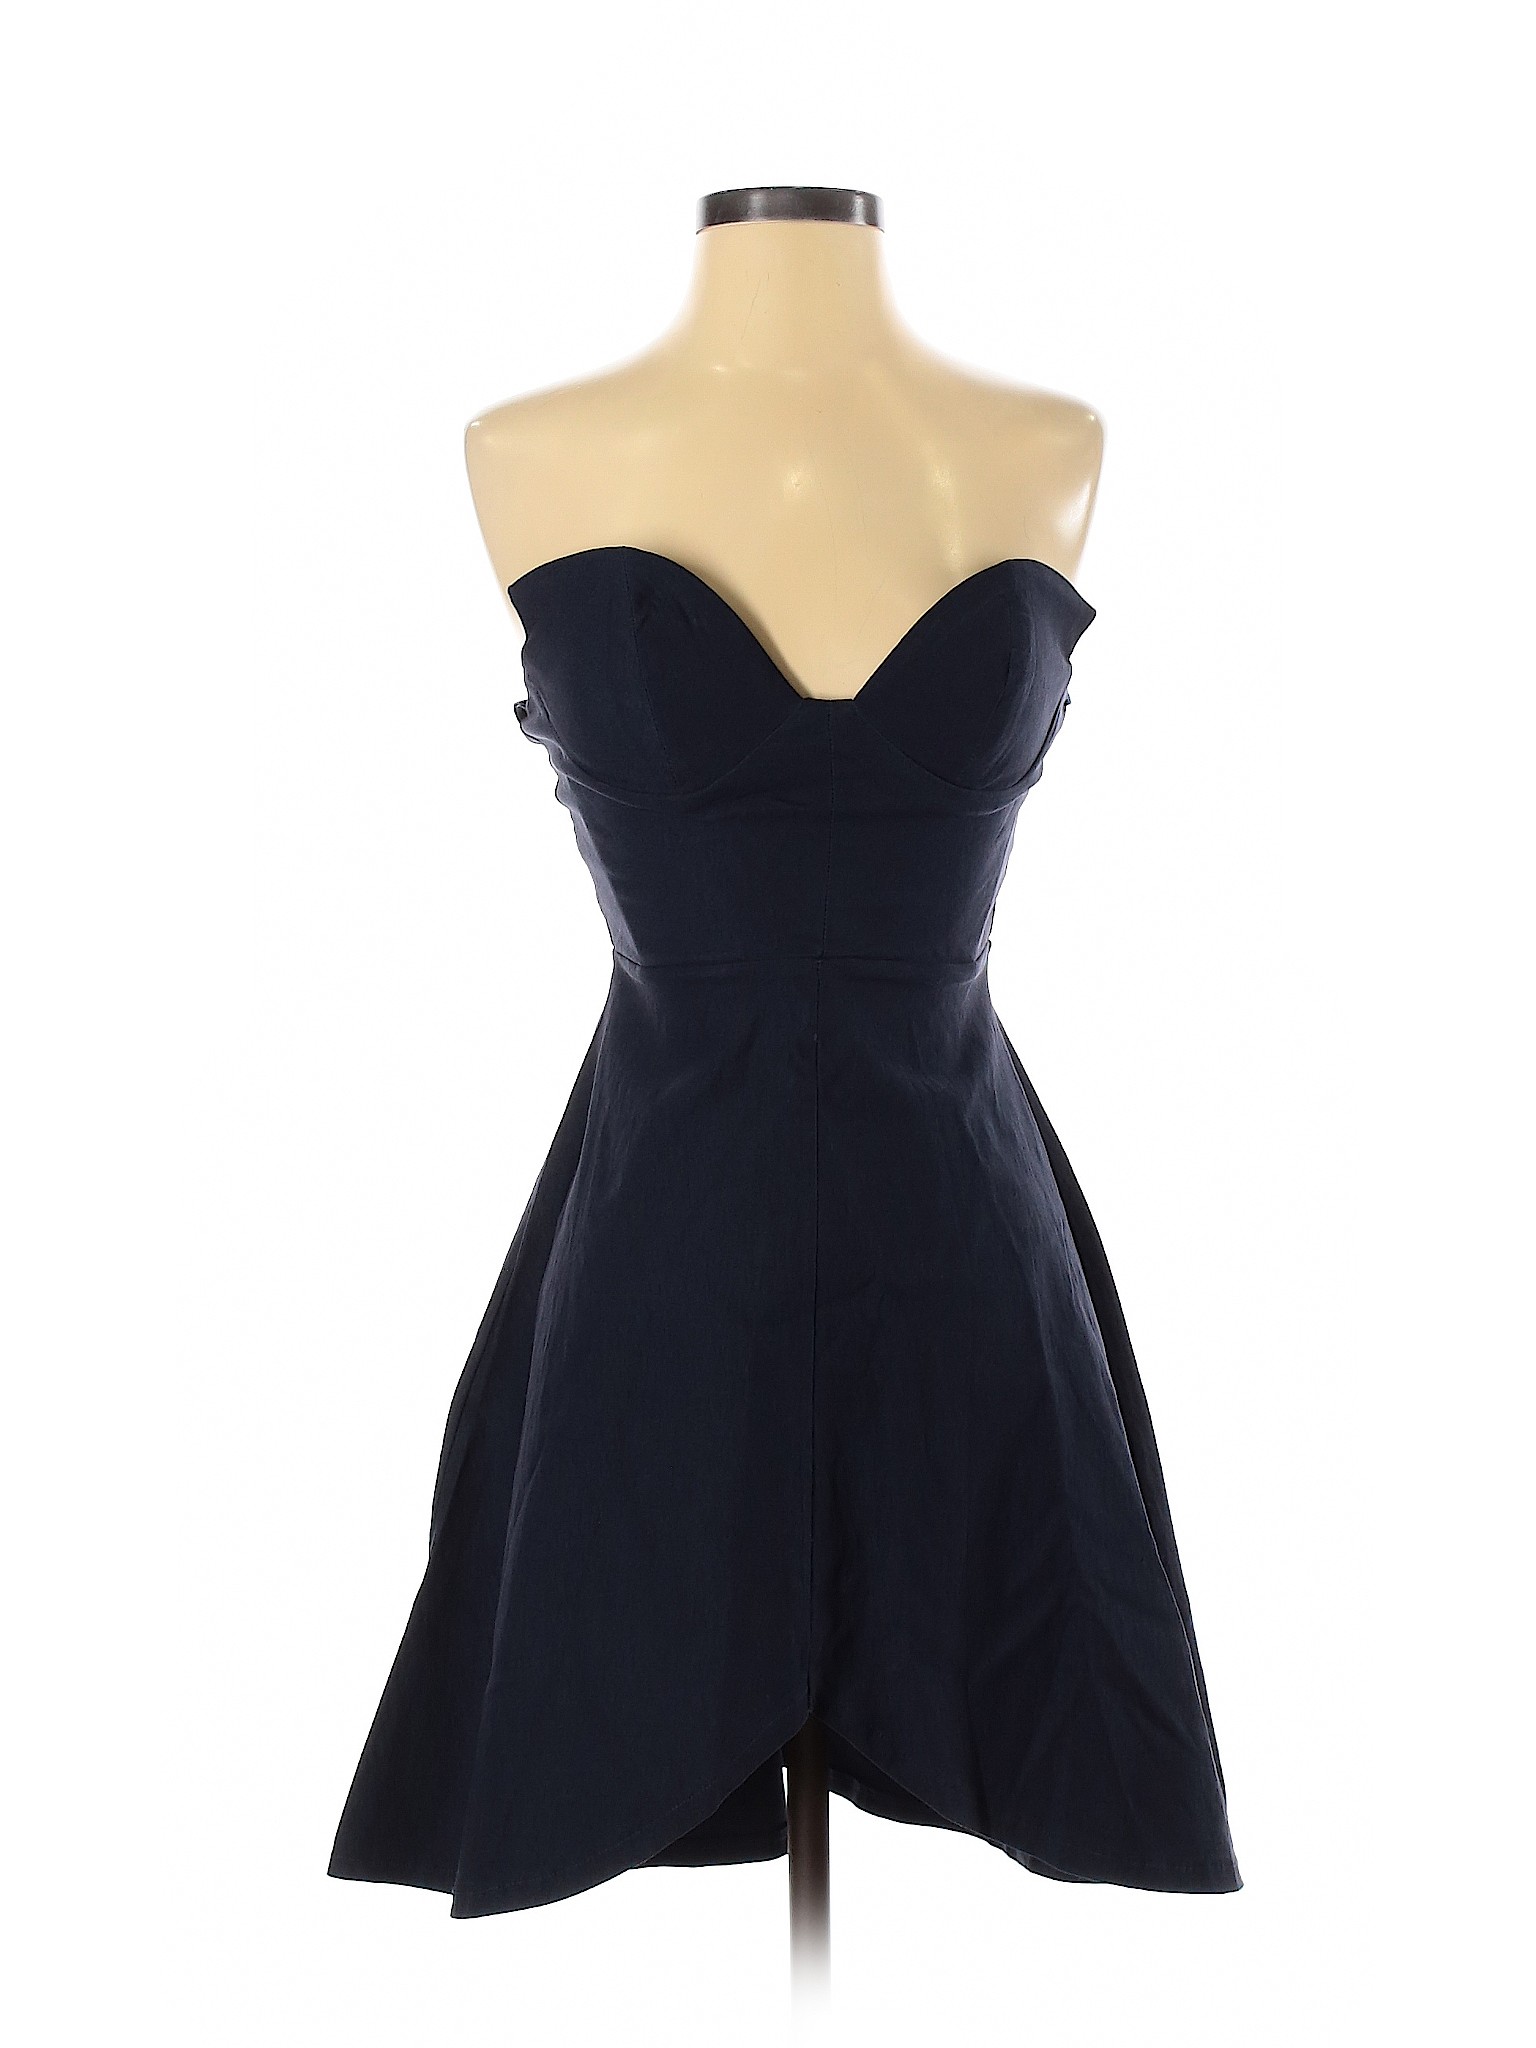 Nasty Gal Inc. Women Black Cocktail Dress XS | eBay